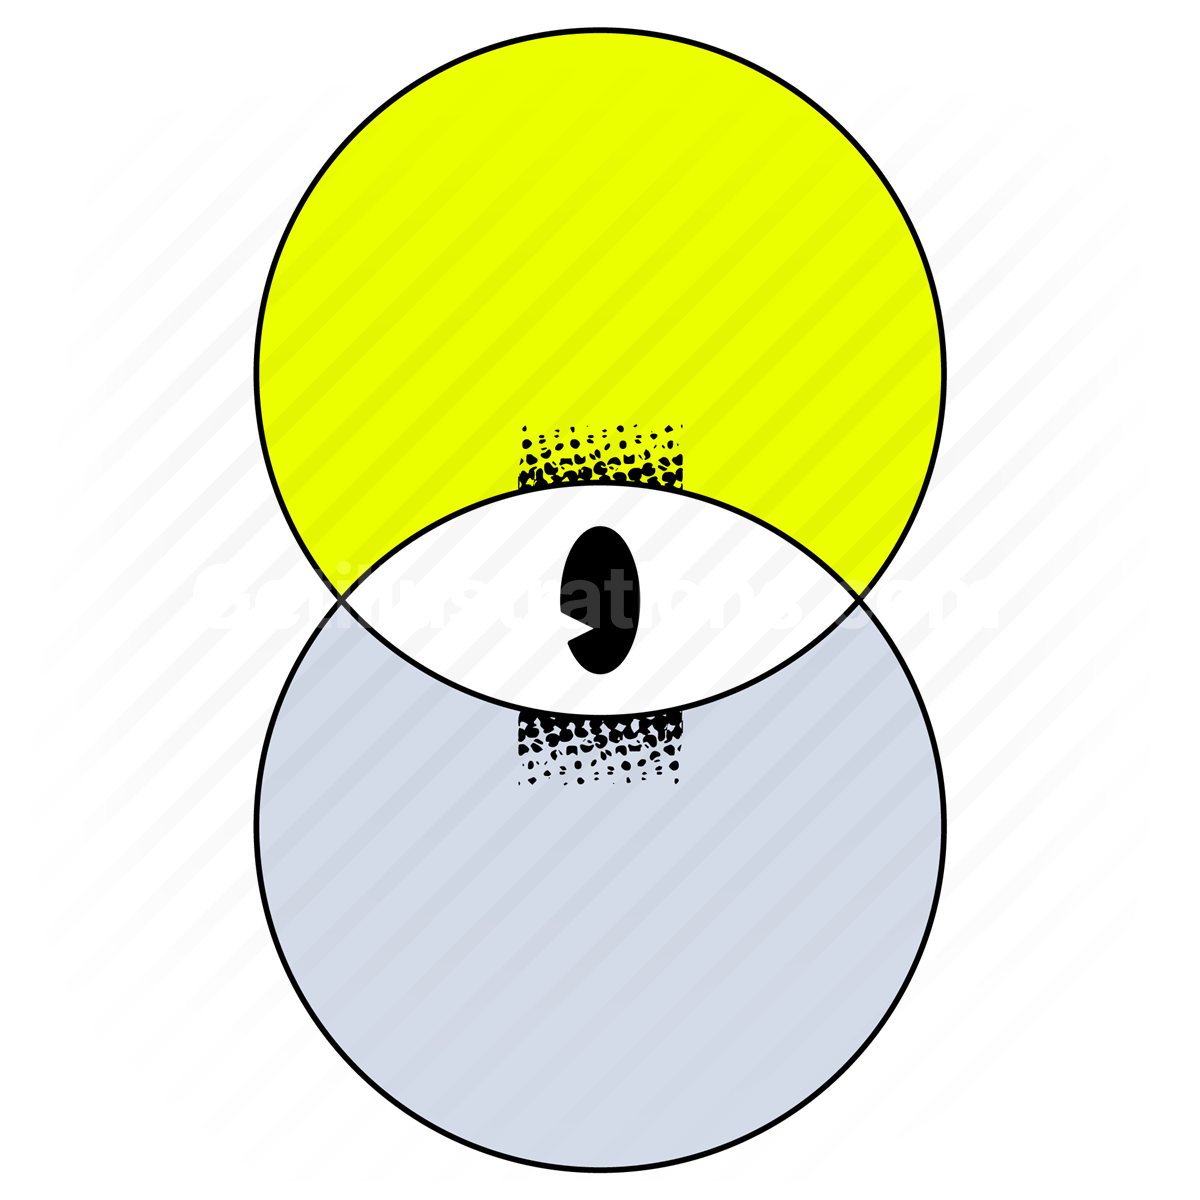 overlap, circle, shapes, eye, vision, find, scan